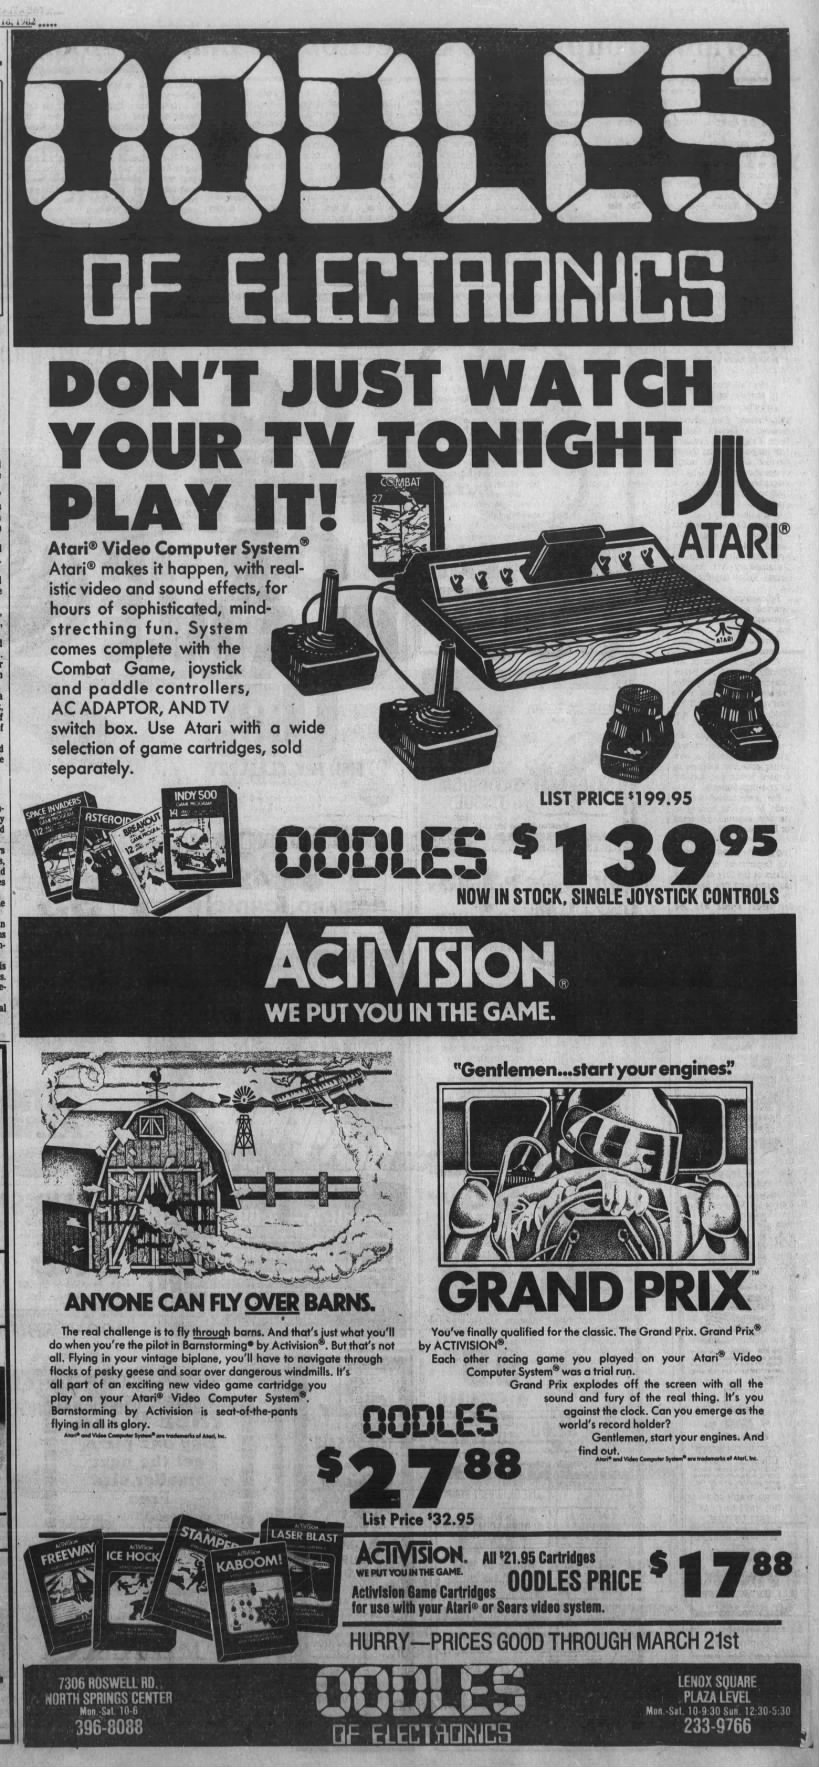 Atari 2600: OODLES (Mar 18, 82)